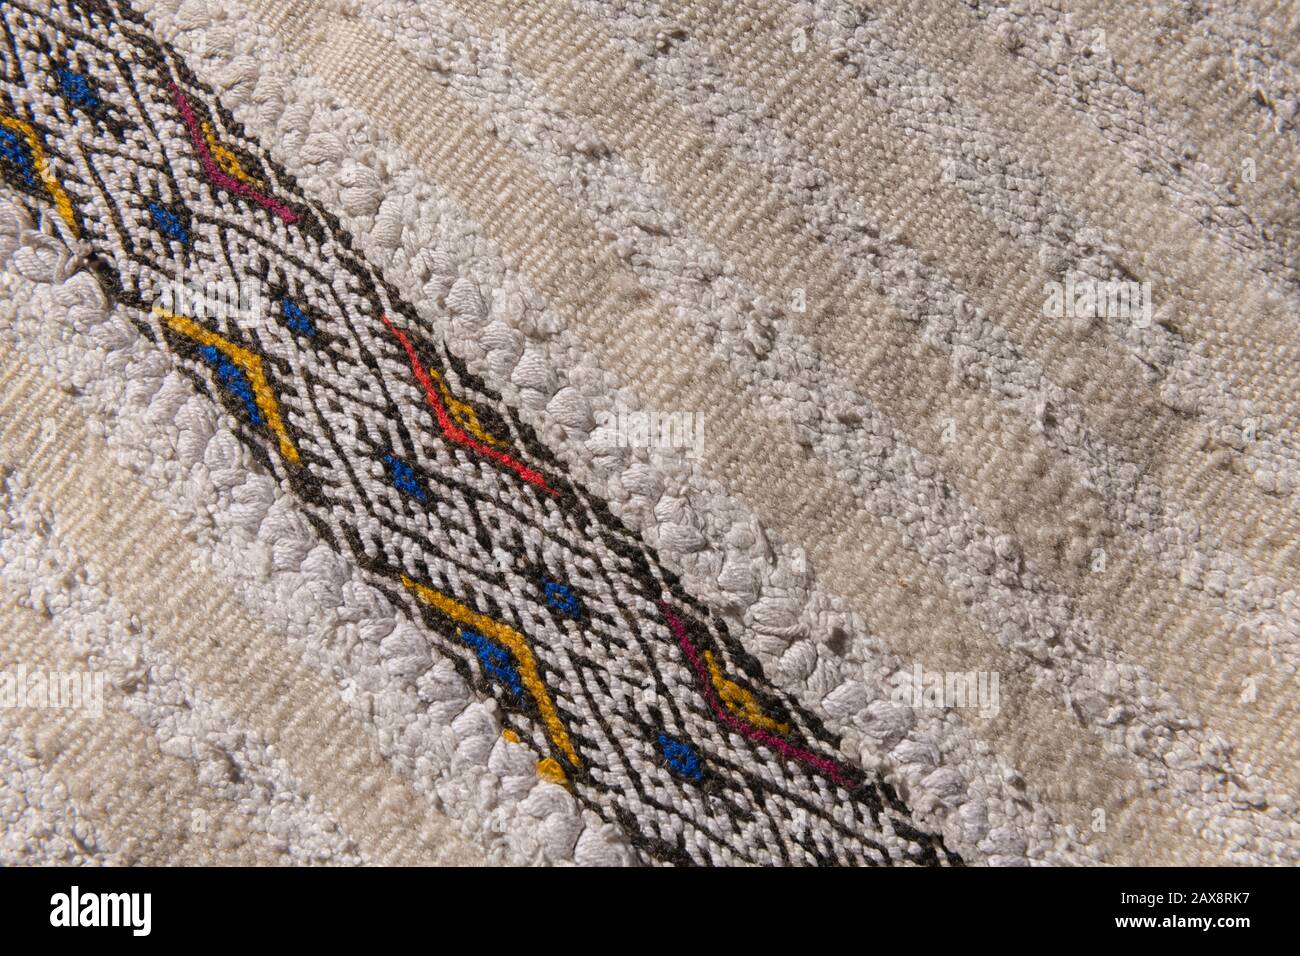 Detalle de cojín marroquí con diseño bereber tradicional. Cerrar imagen de textura de fondo. Foto de stock